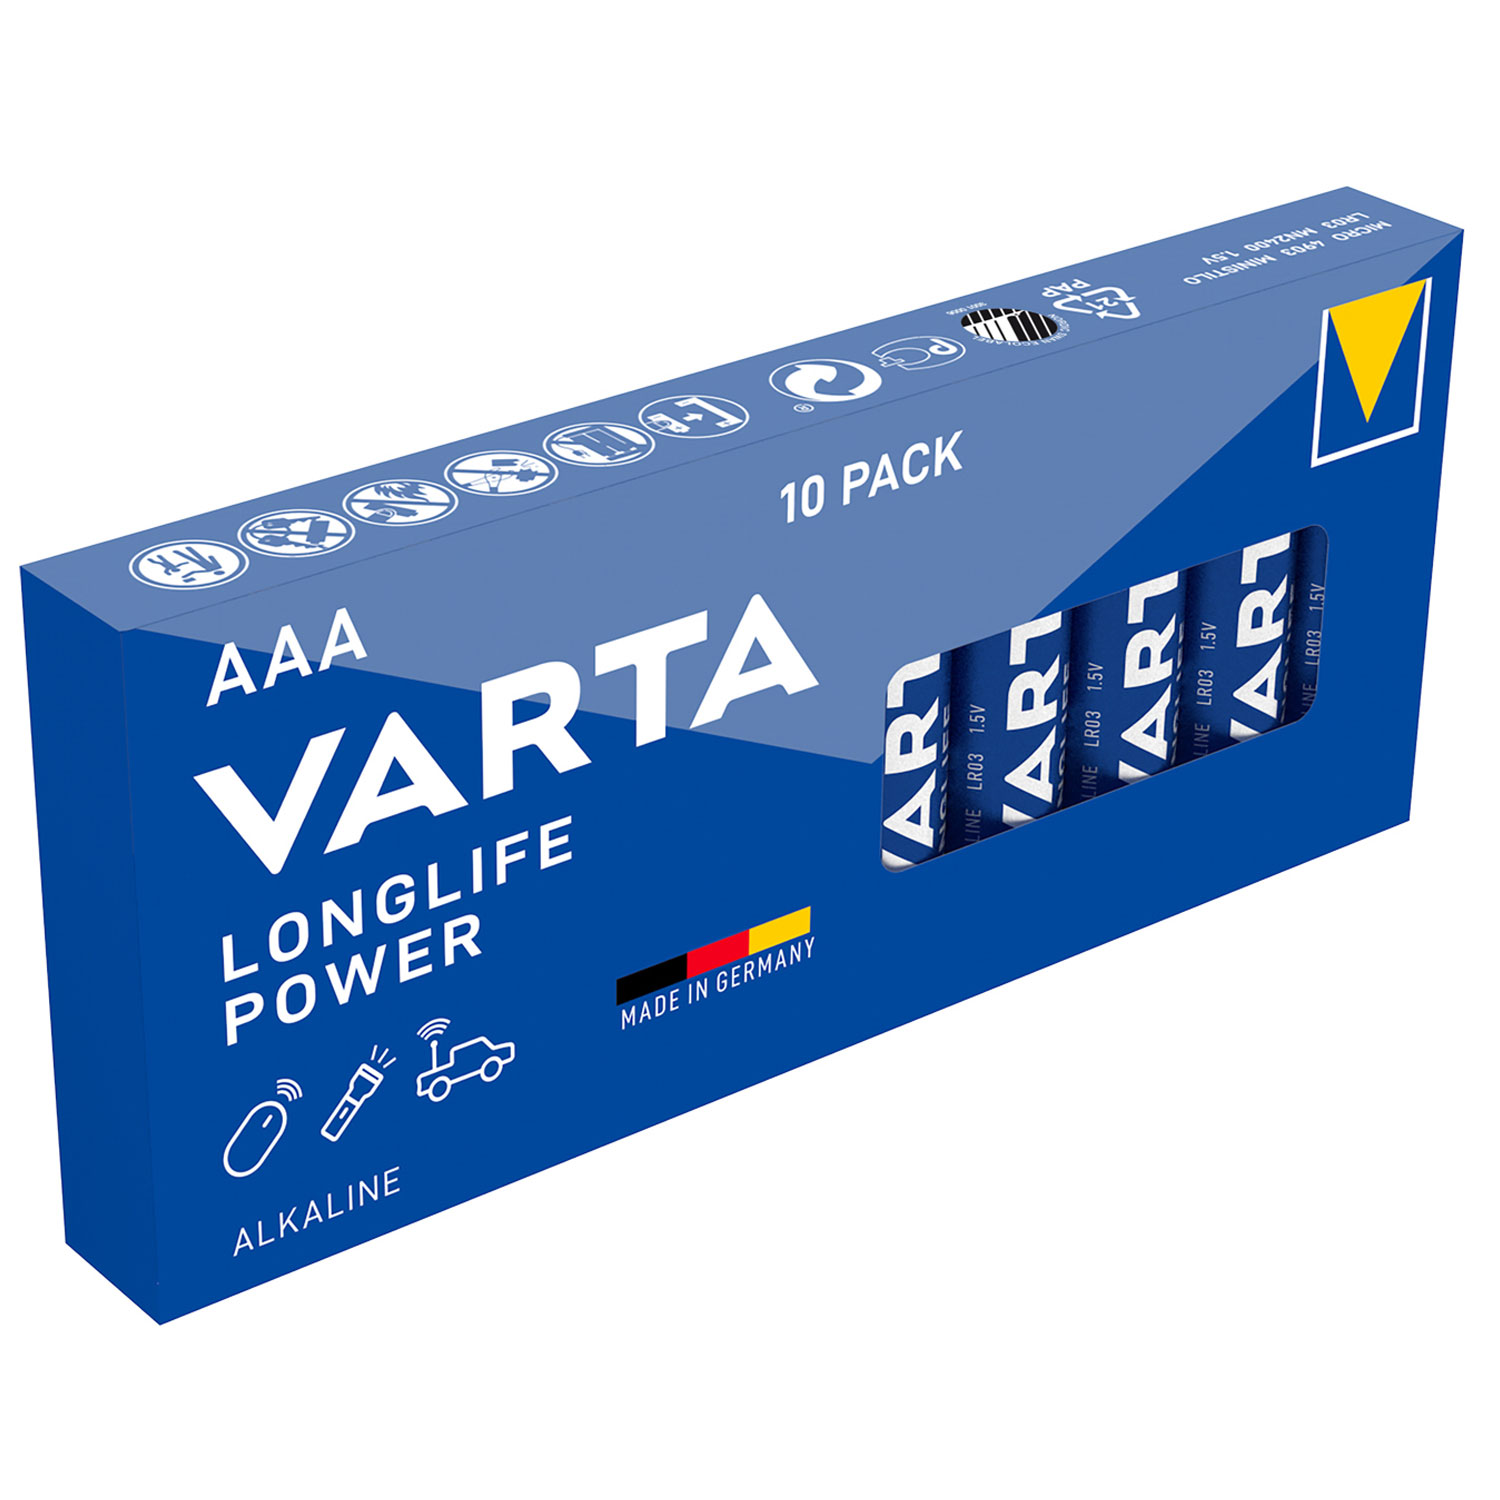 VARTA Micro Batterie LR03 Longlife Power (ehem. High Energy) - 10er Vorteilspack